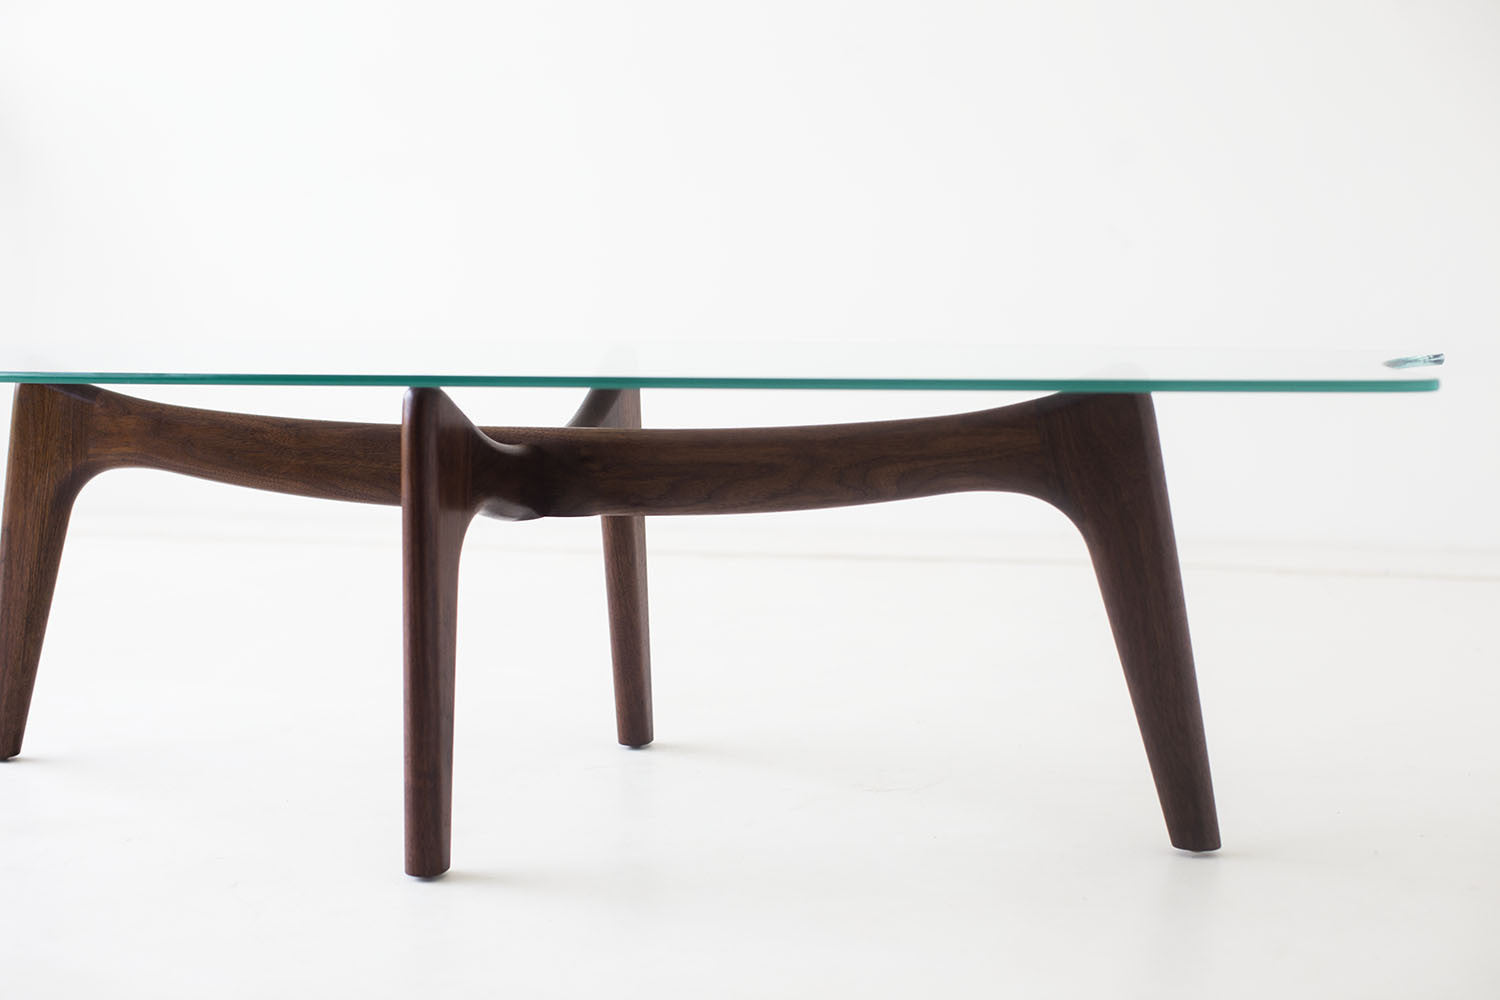 Surf Modern Coffee Table - 1513